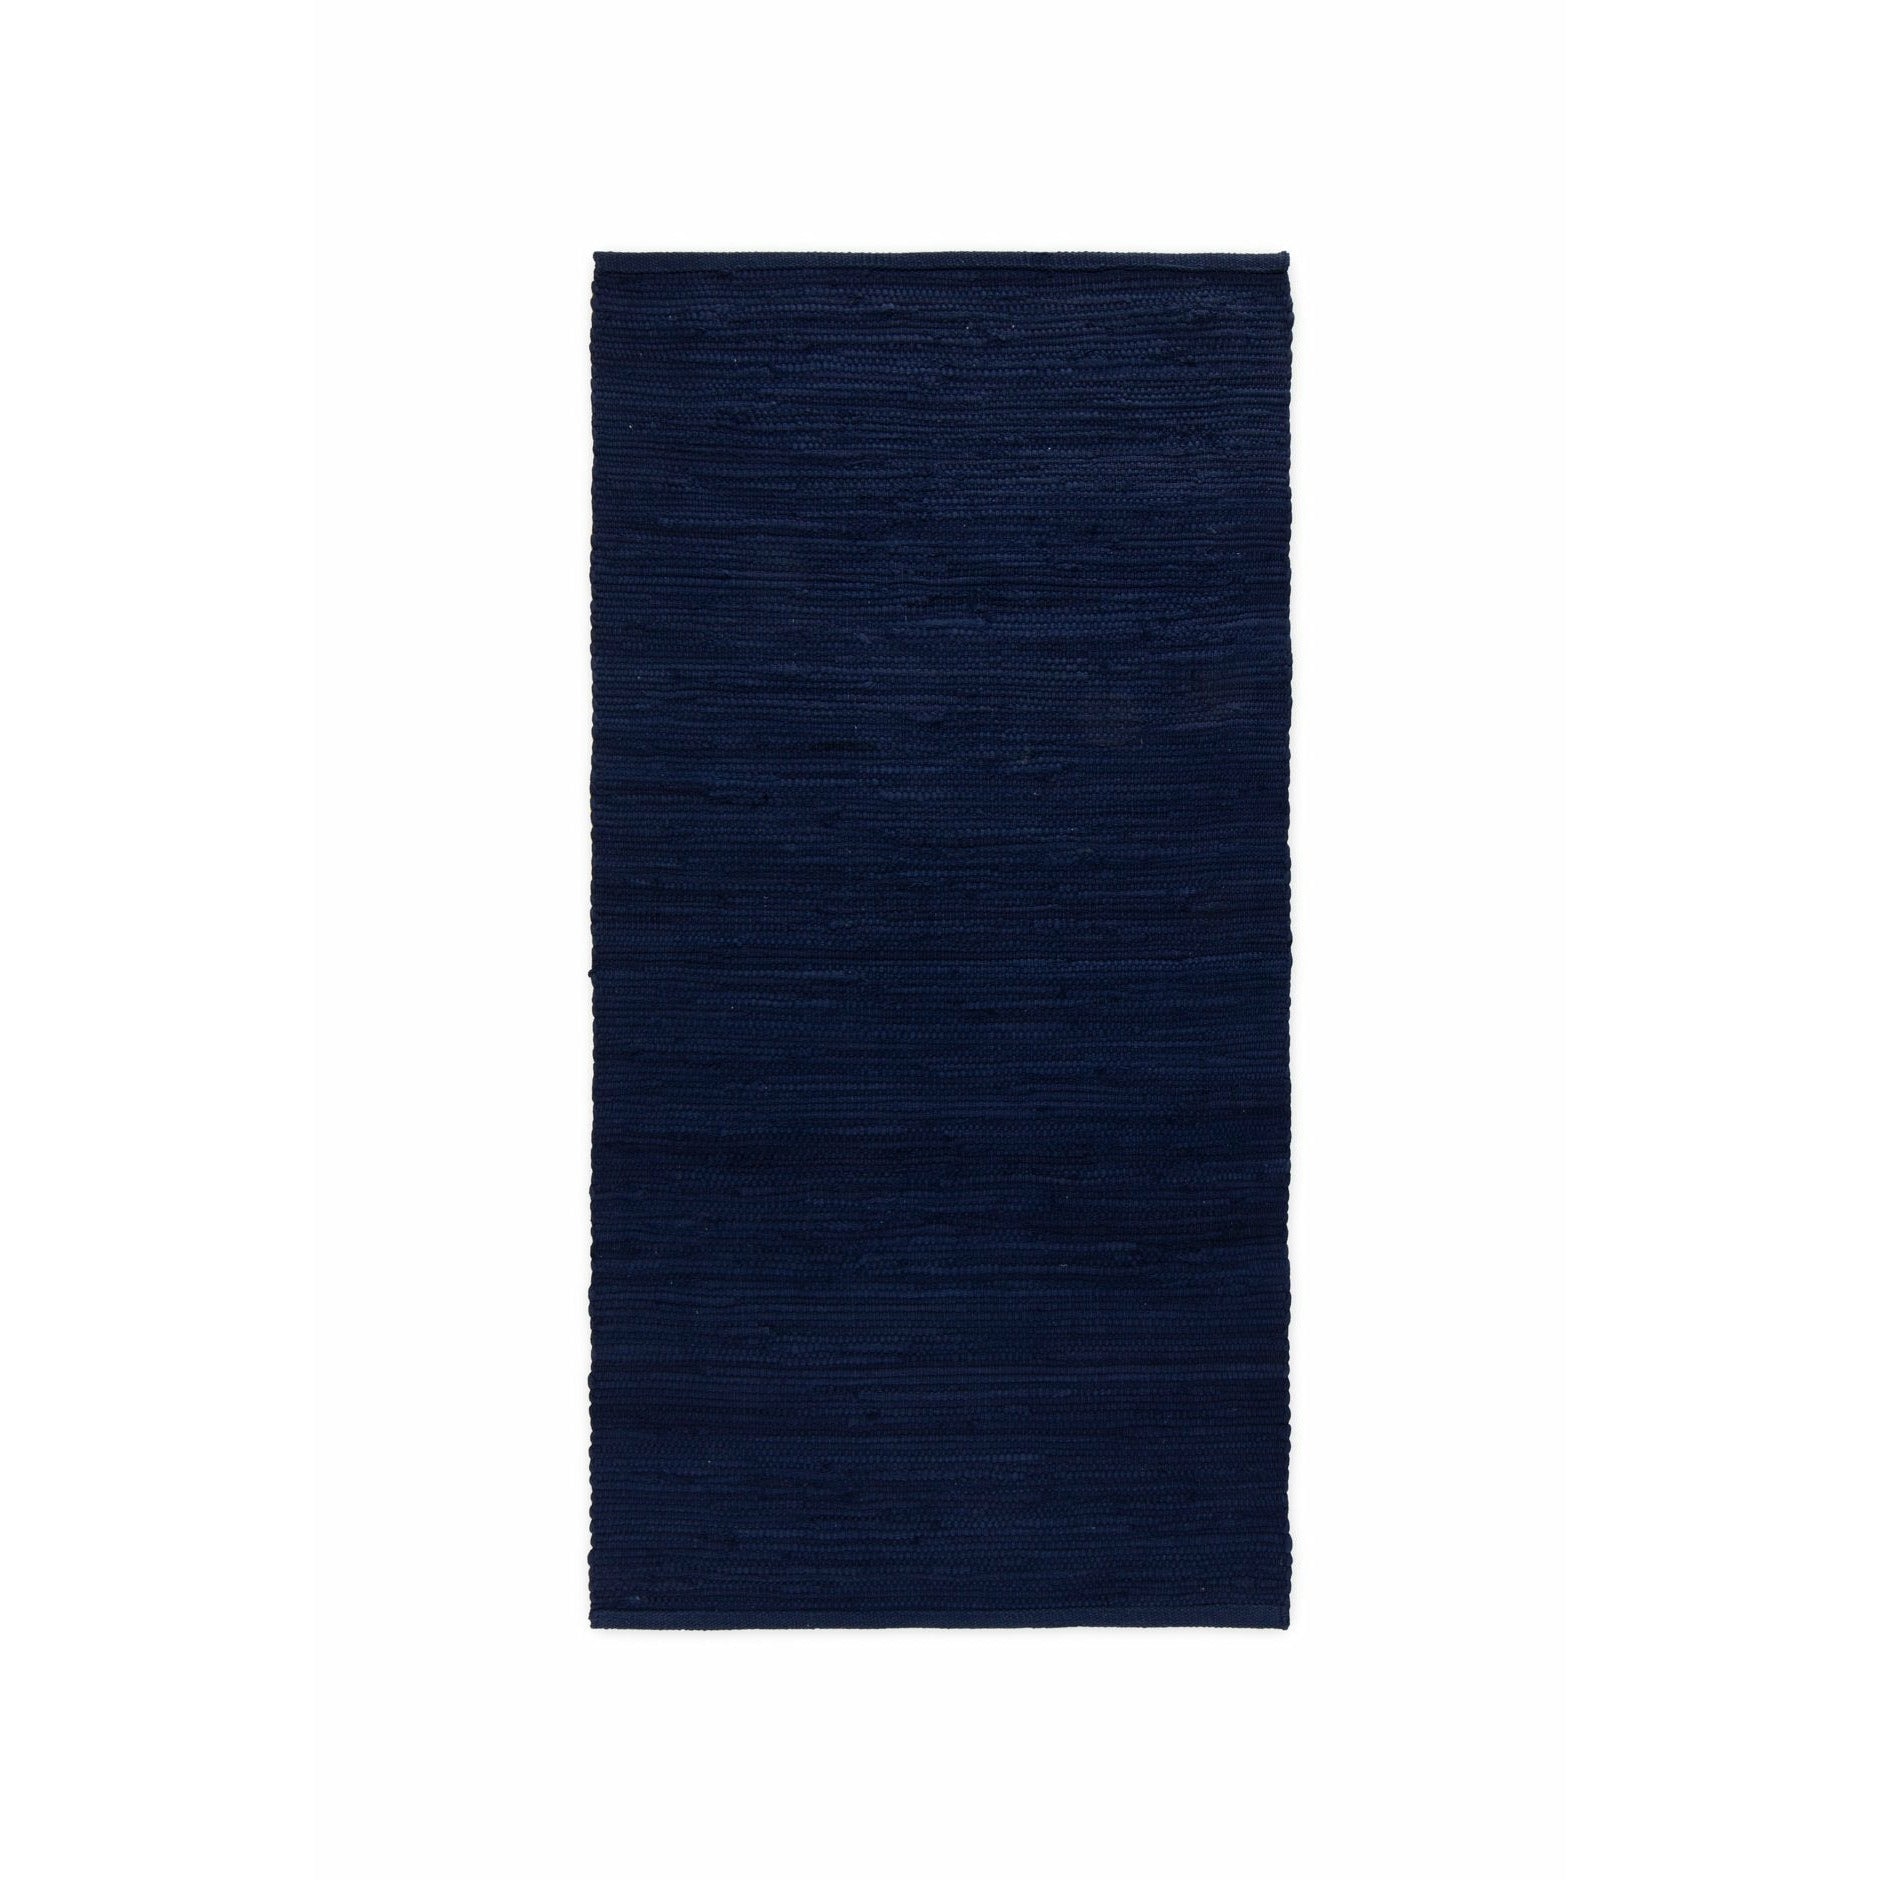 Koberec pevný bavlněný koberec hluboký oceán modrá, 75 x 300 cm